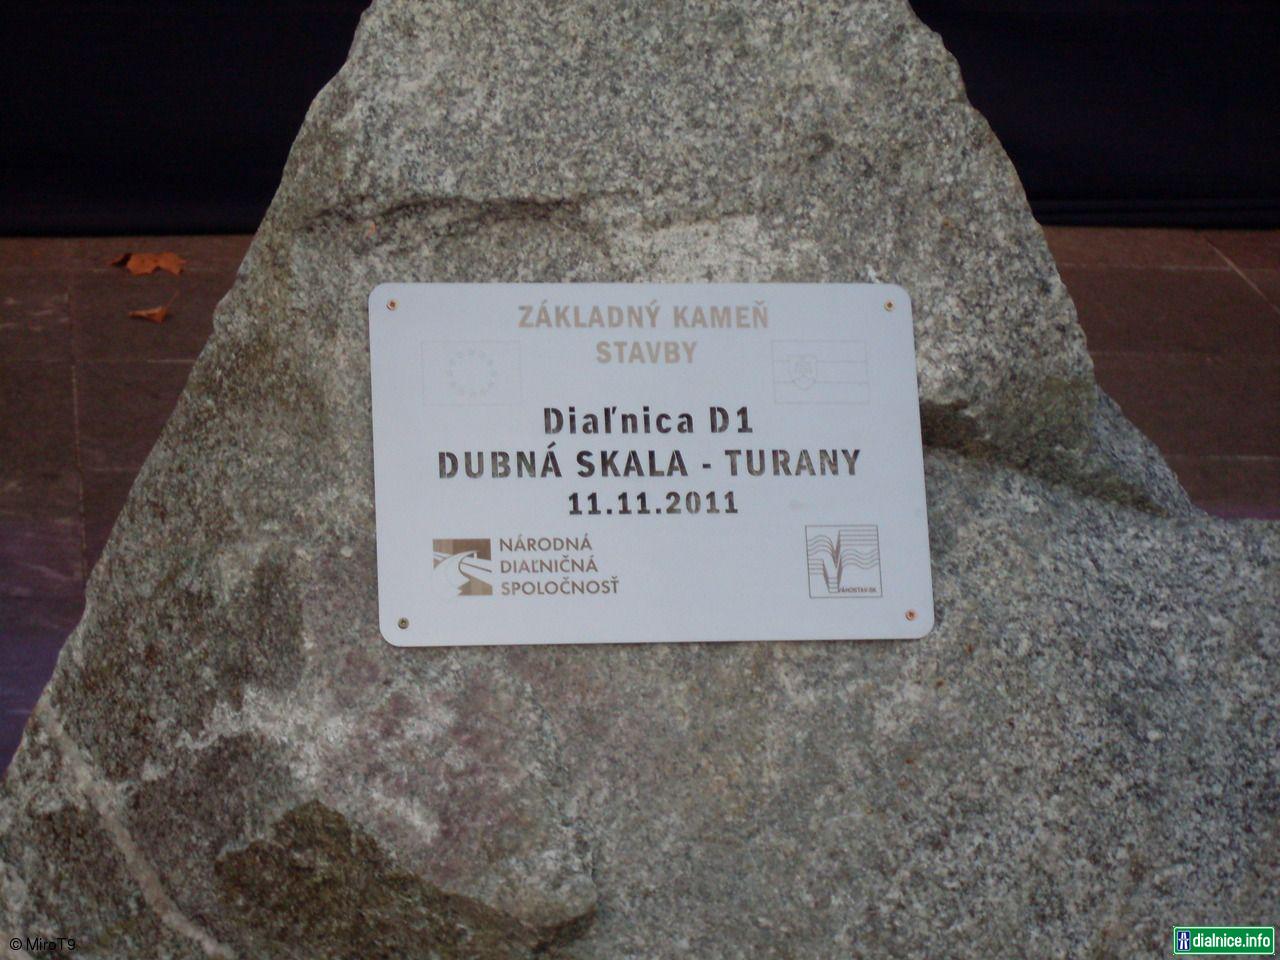 Základný kameň stavby Diaľnica D1 DUBNÁ SKALA - TURANY